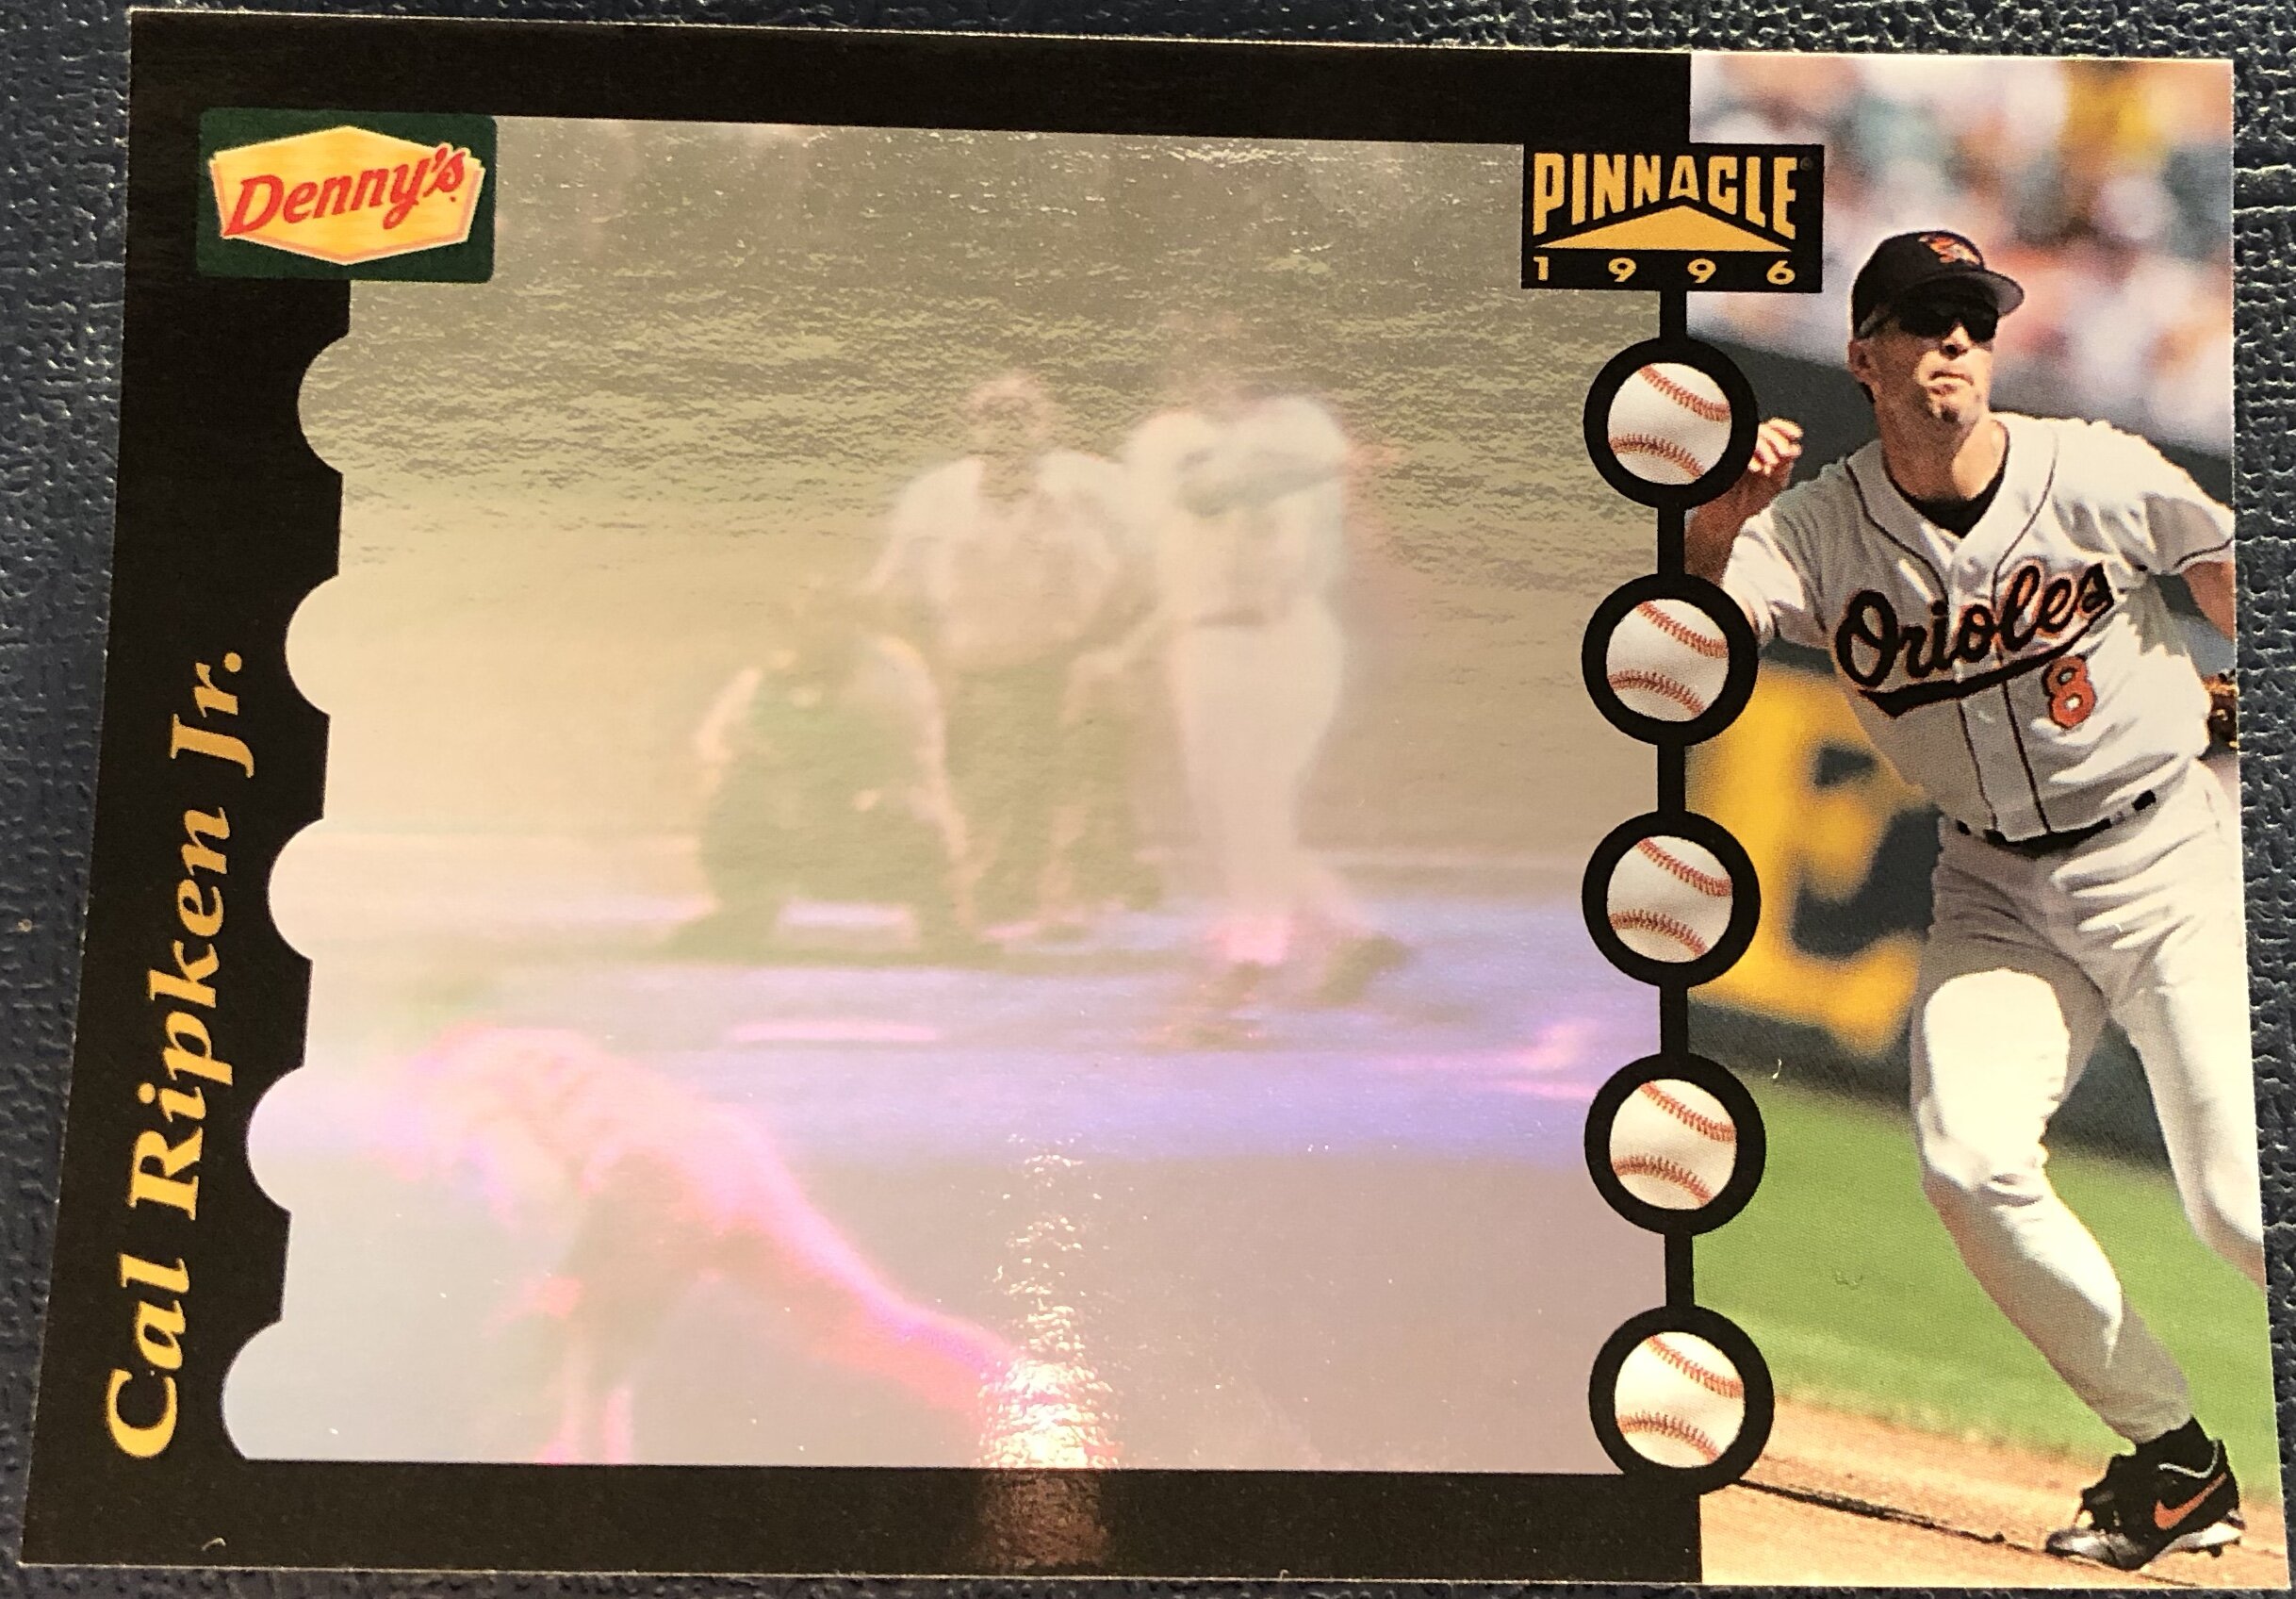 1996 Pinnacle Denny's Hologram Baseball Card #11 Kirby Puckett